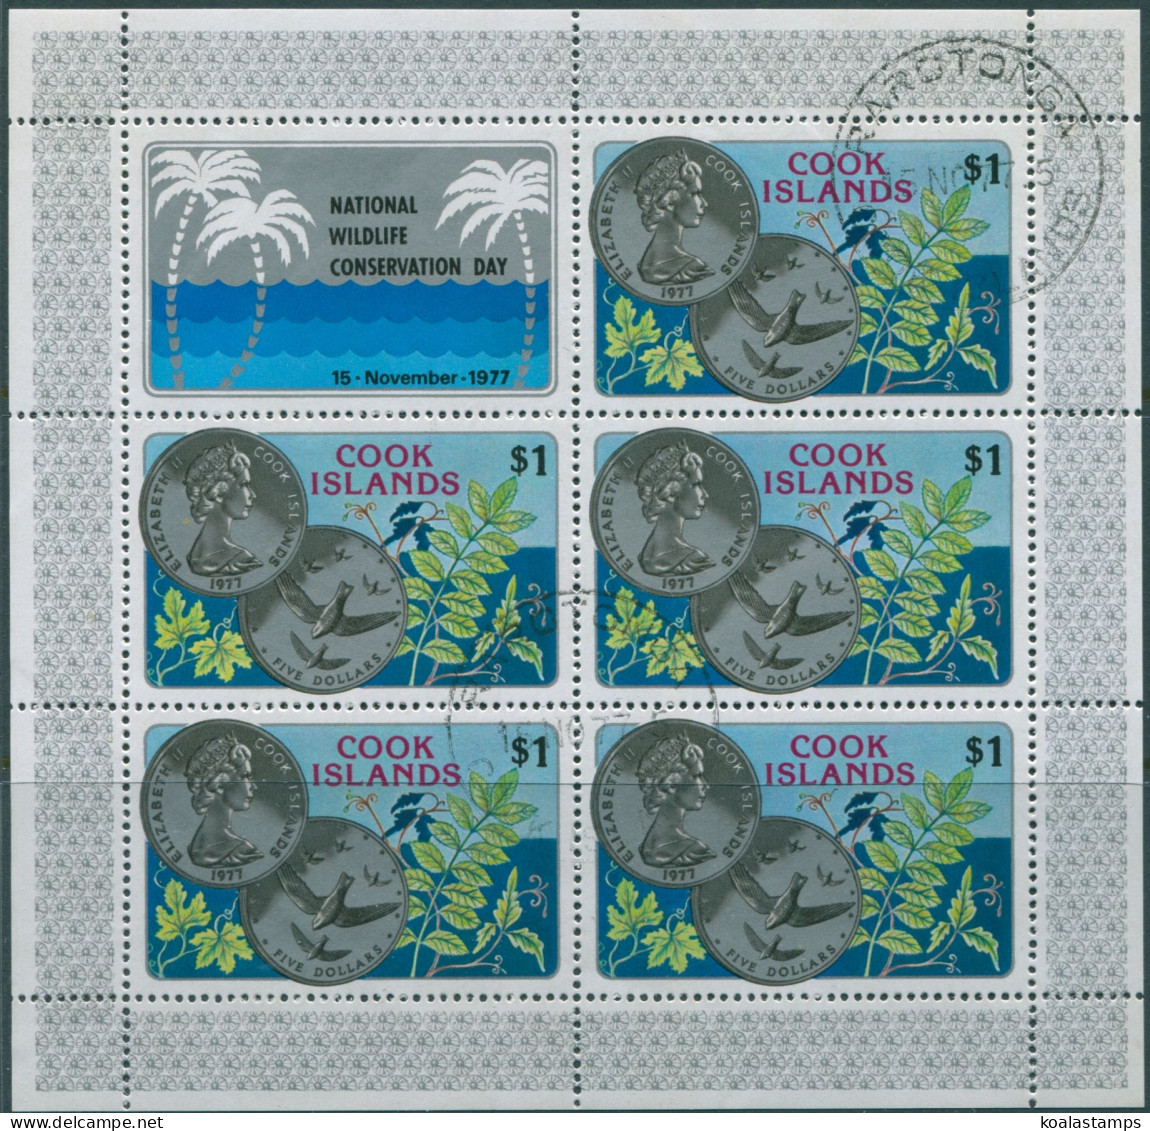 Cook Islands 1977 SG583 $1 National Wildlife Coin Sheet FU - Cook Islands